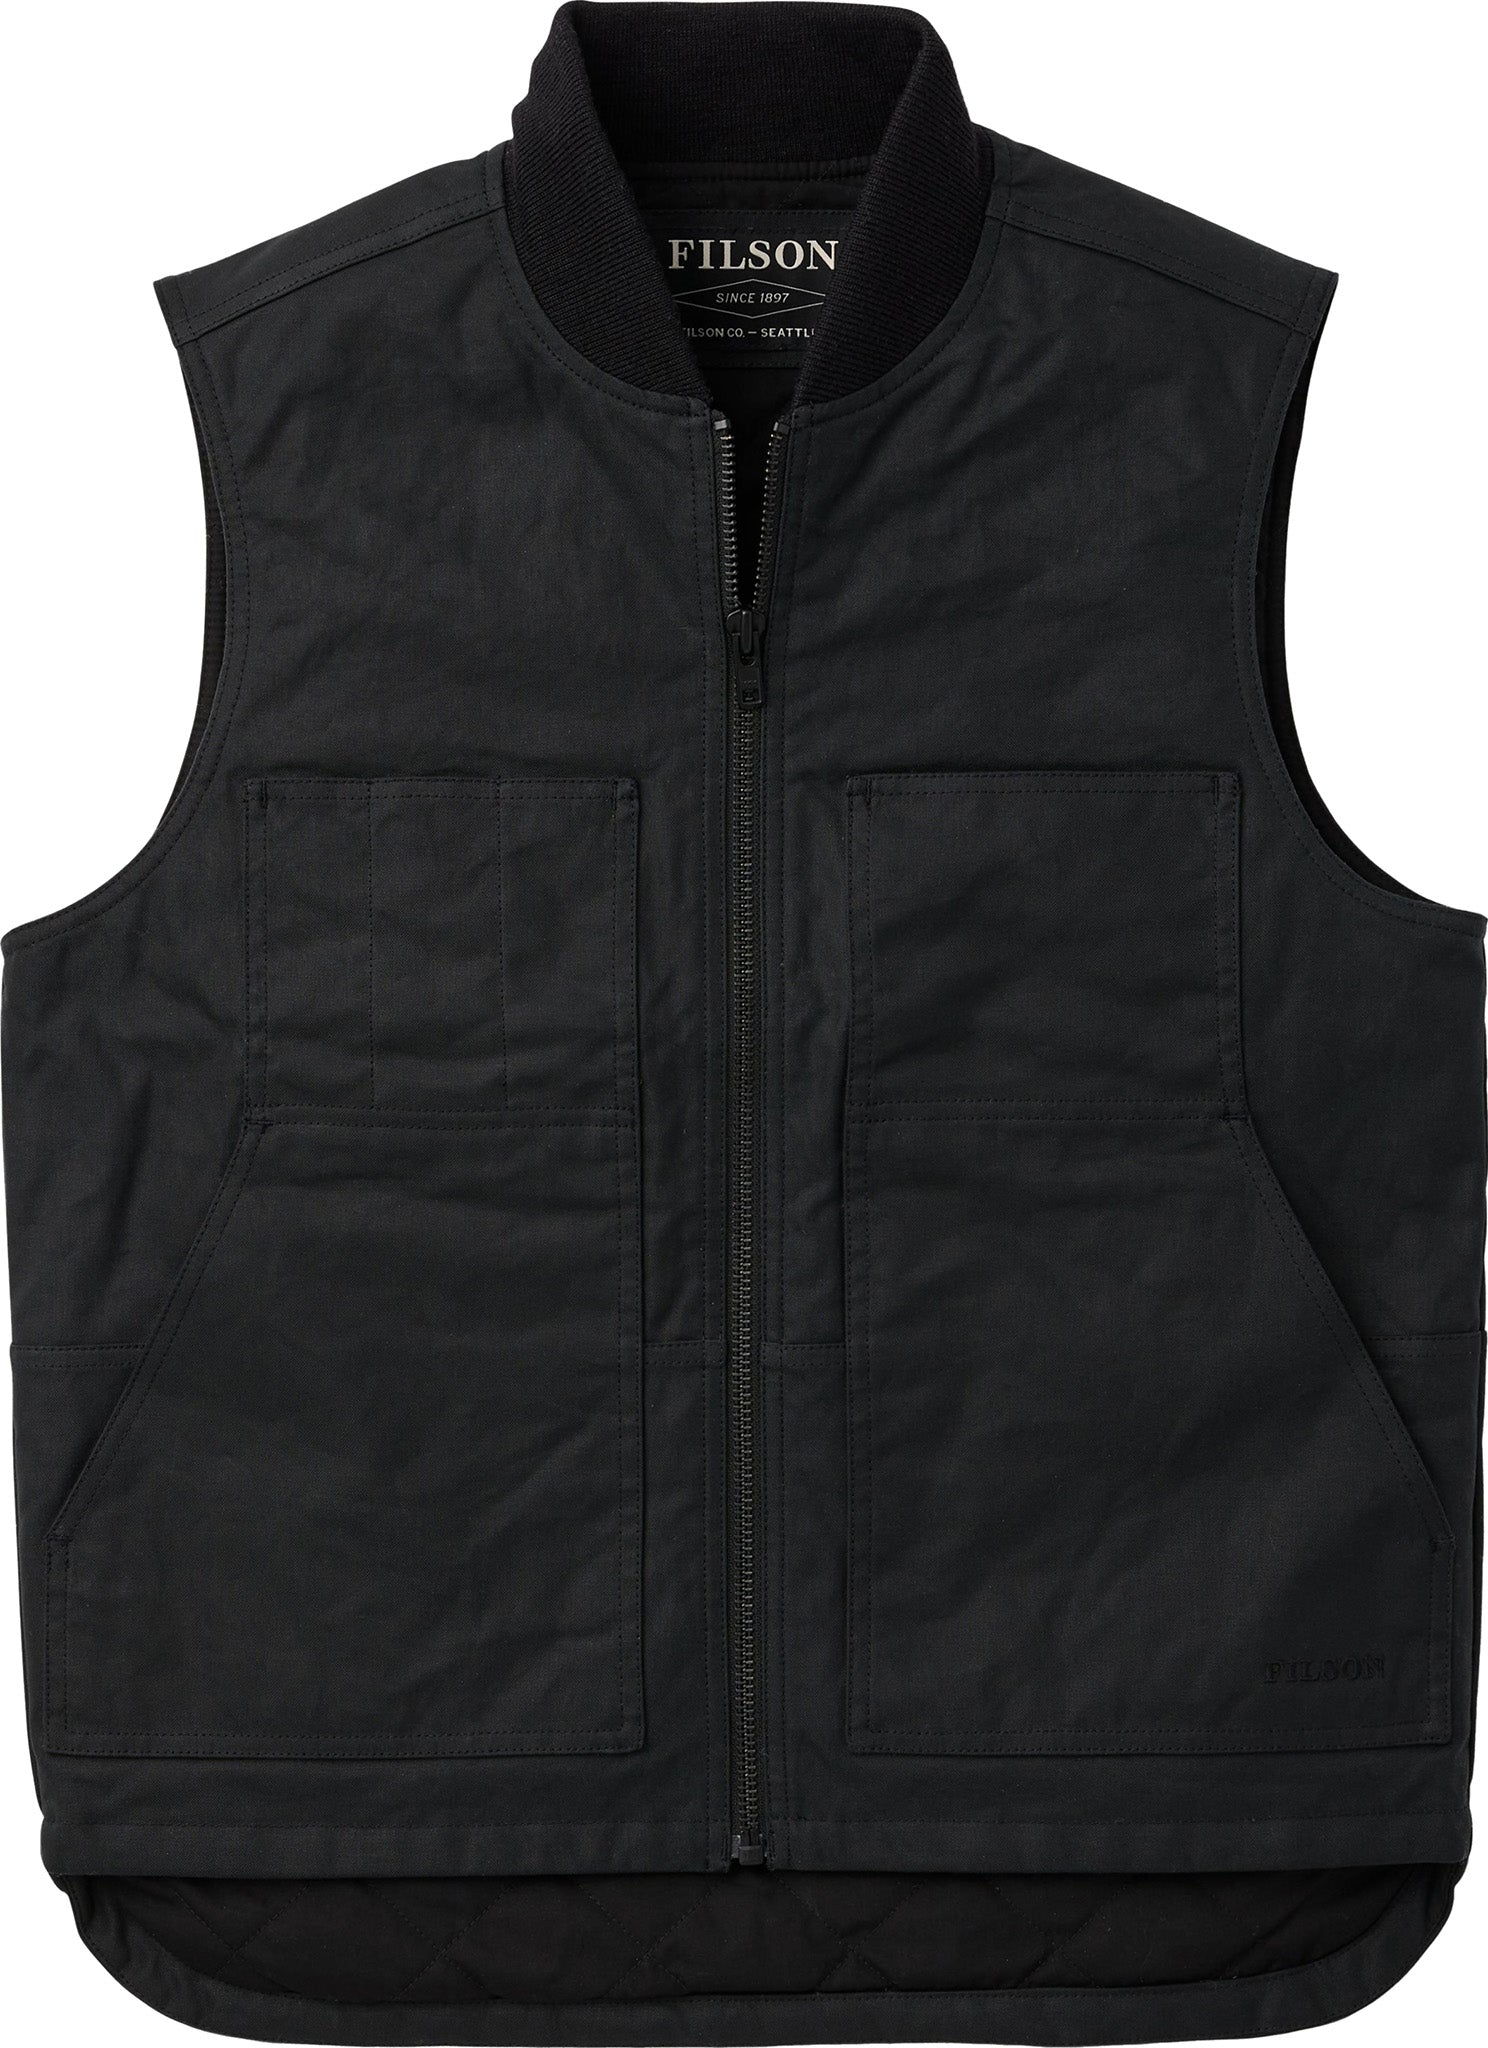 Filson Tin Cloth Insulated Work Vest - Black XL